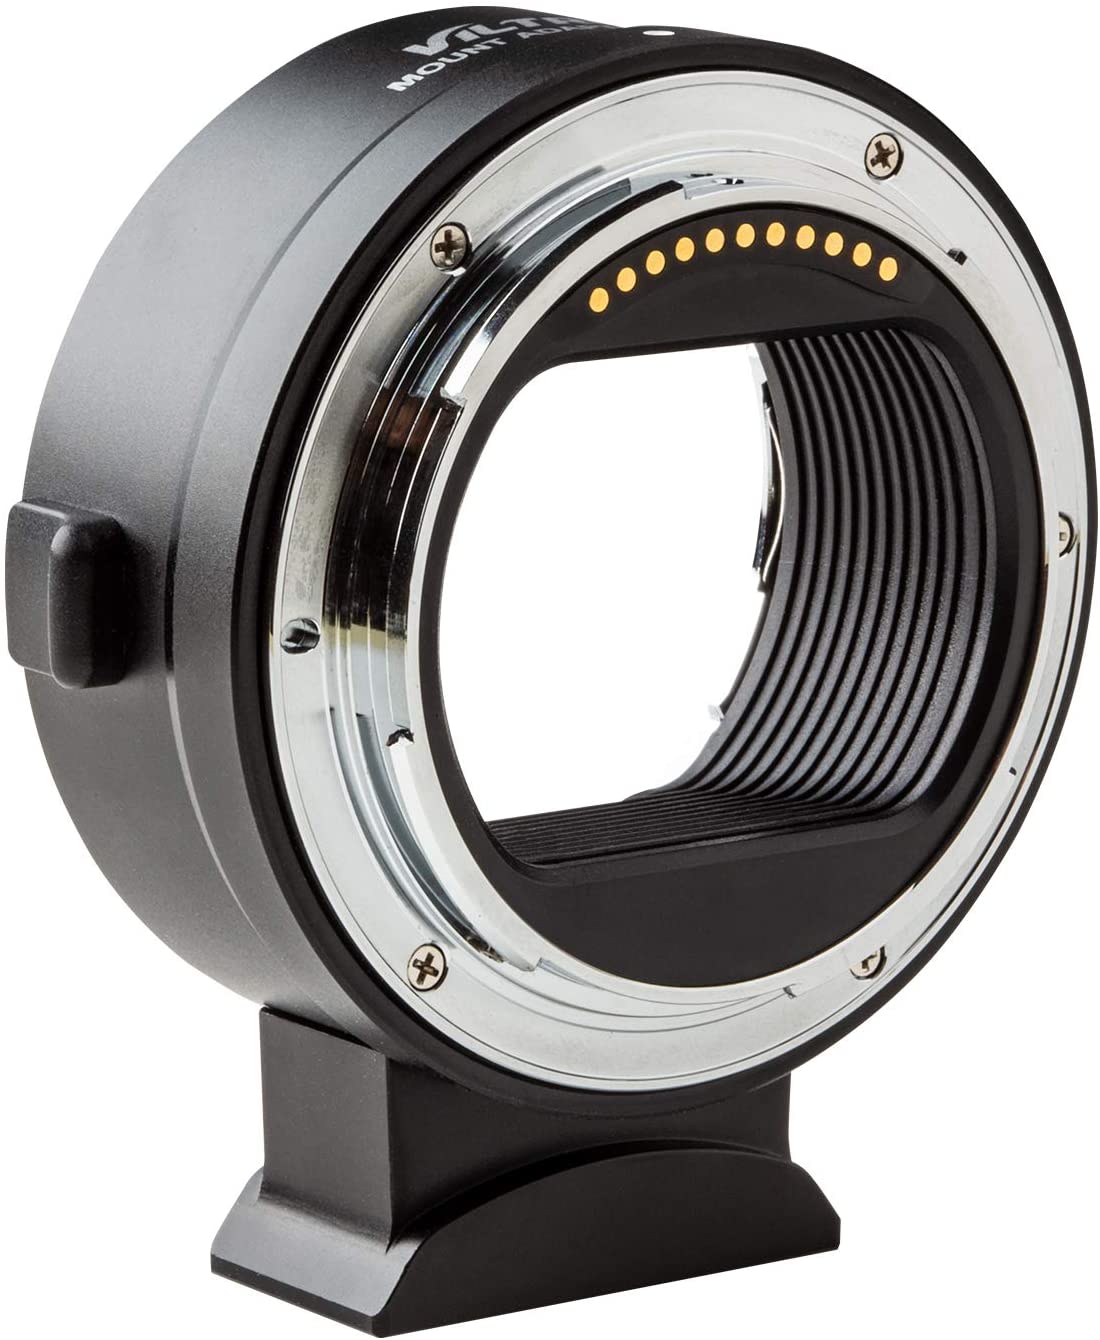 Адаптер VILTROX EF-Z Lens Mount Adapter for Canon EF or EF-S-Mount Lens to Nikon Z-Mount Camera